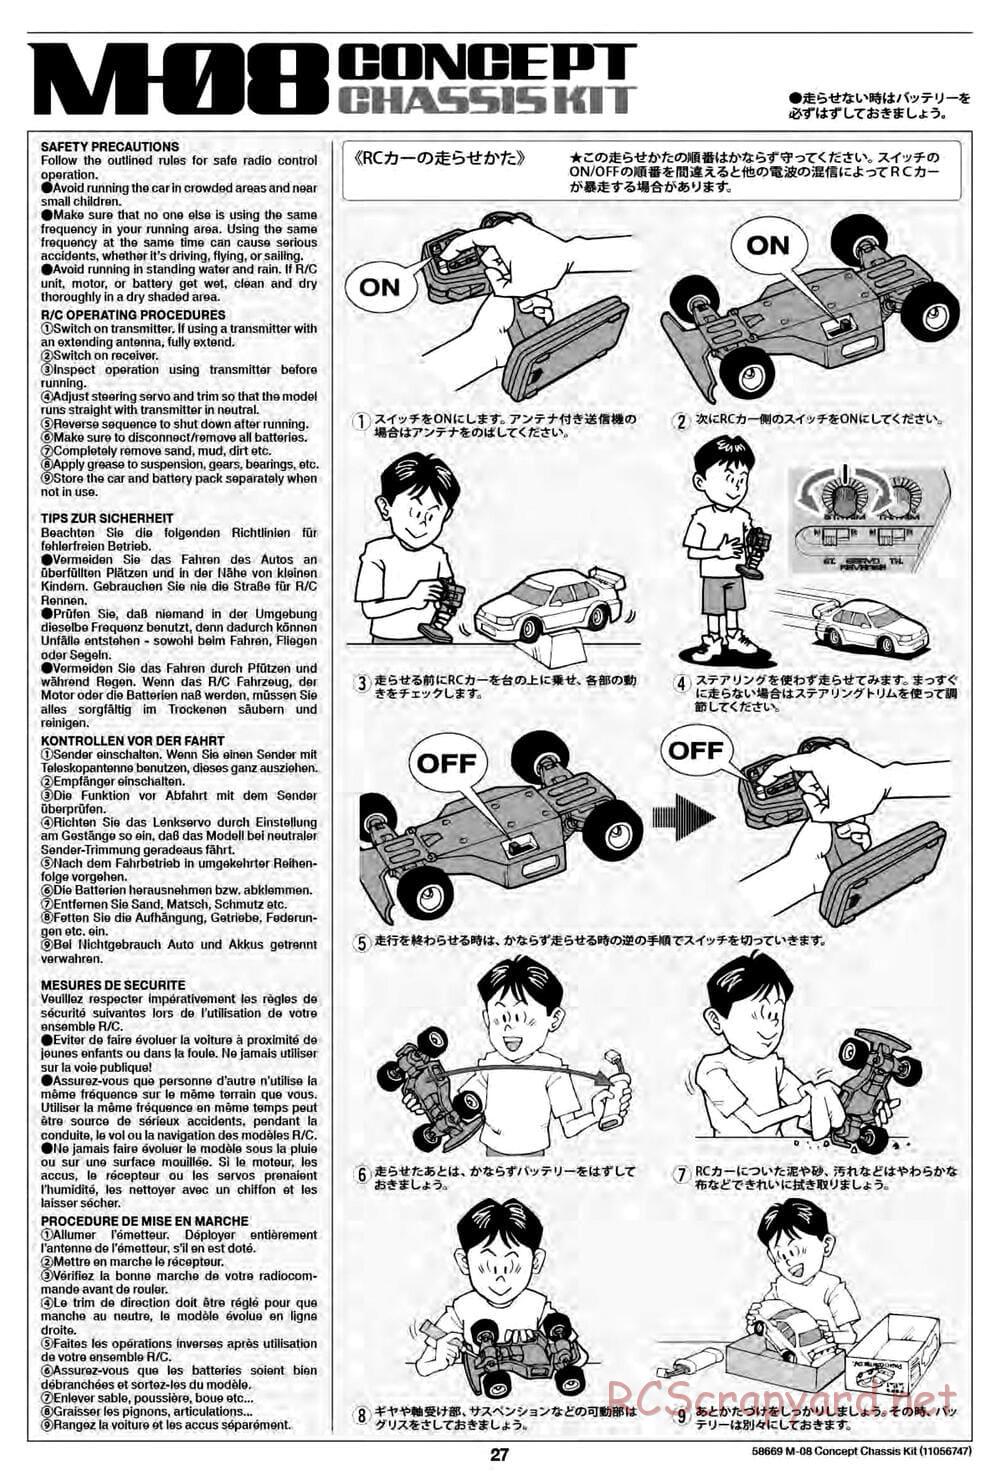 Tamiya - M-08 Concept Chassis - Manual - Page 27